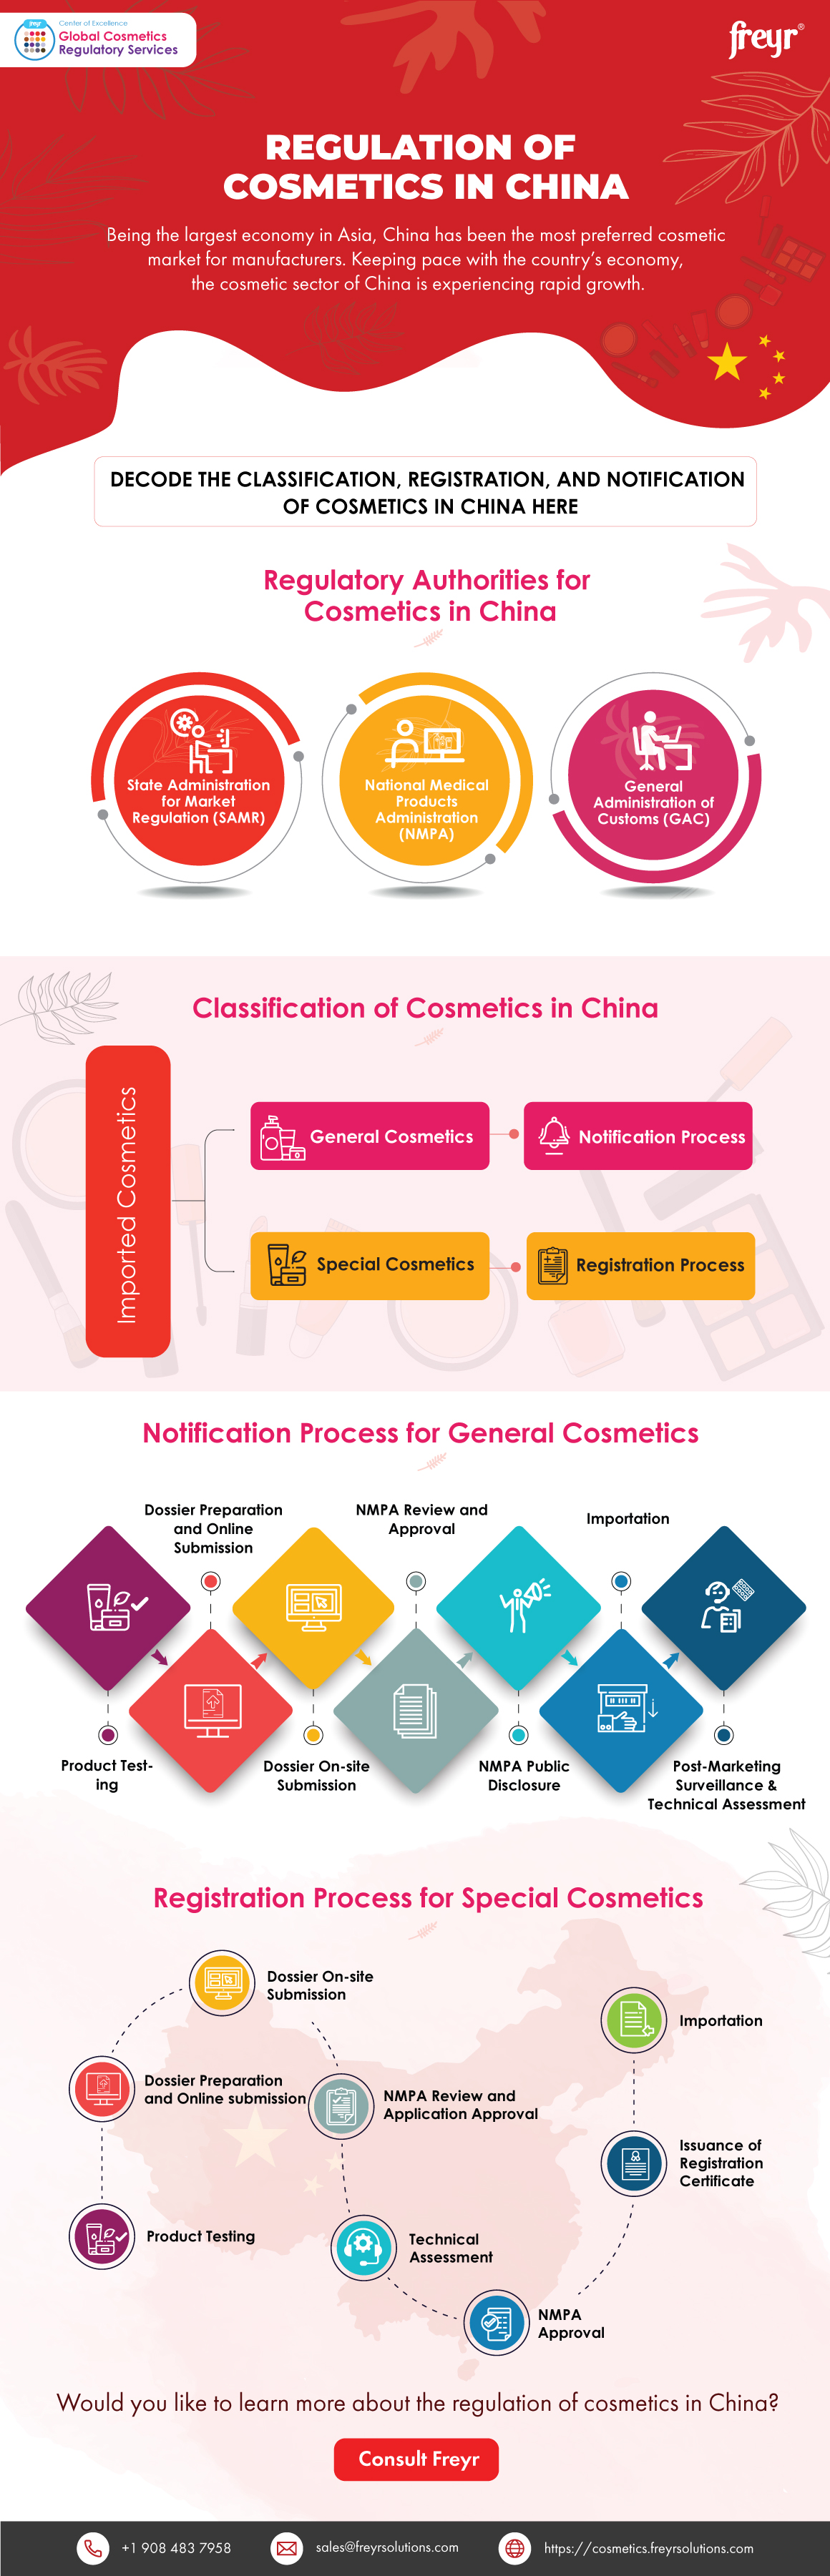 Regulation of Cosmetics in China